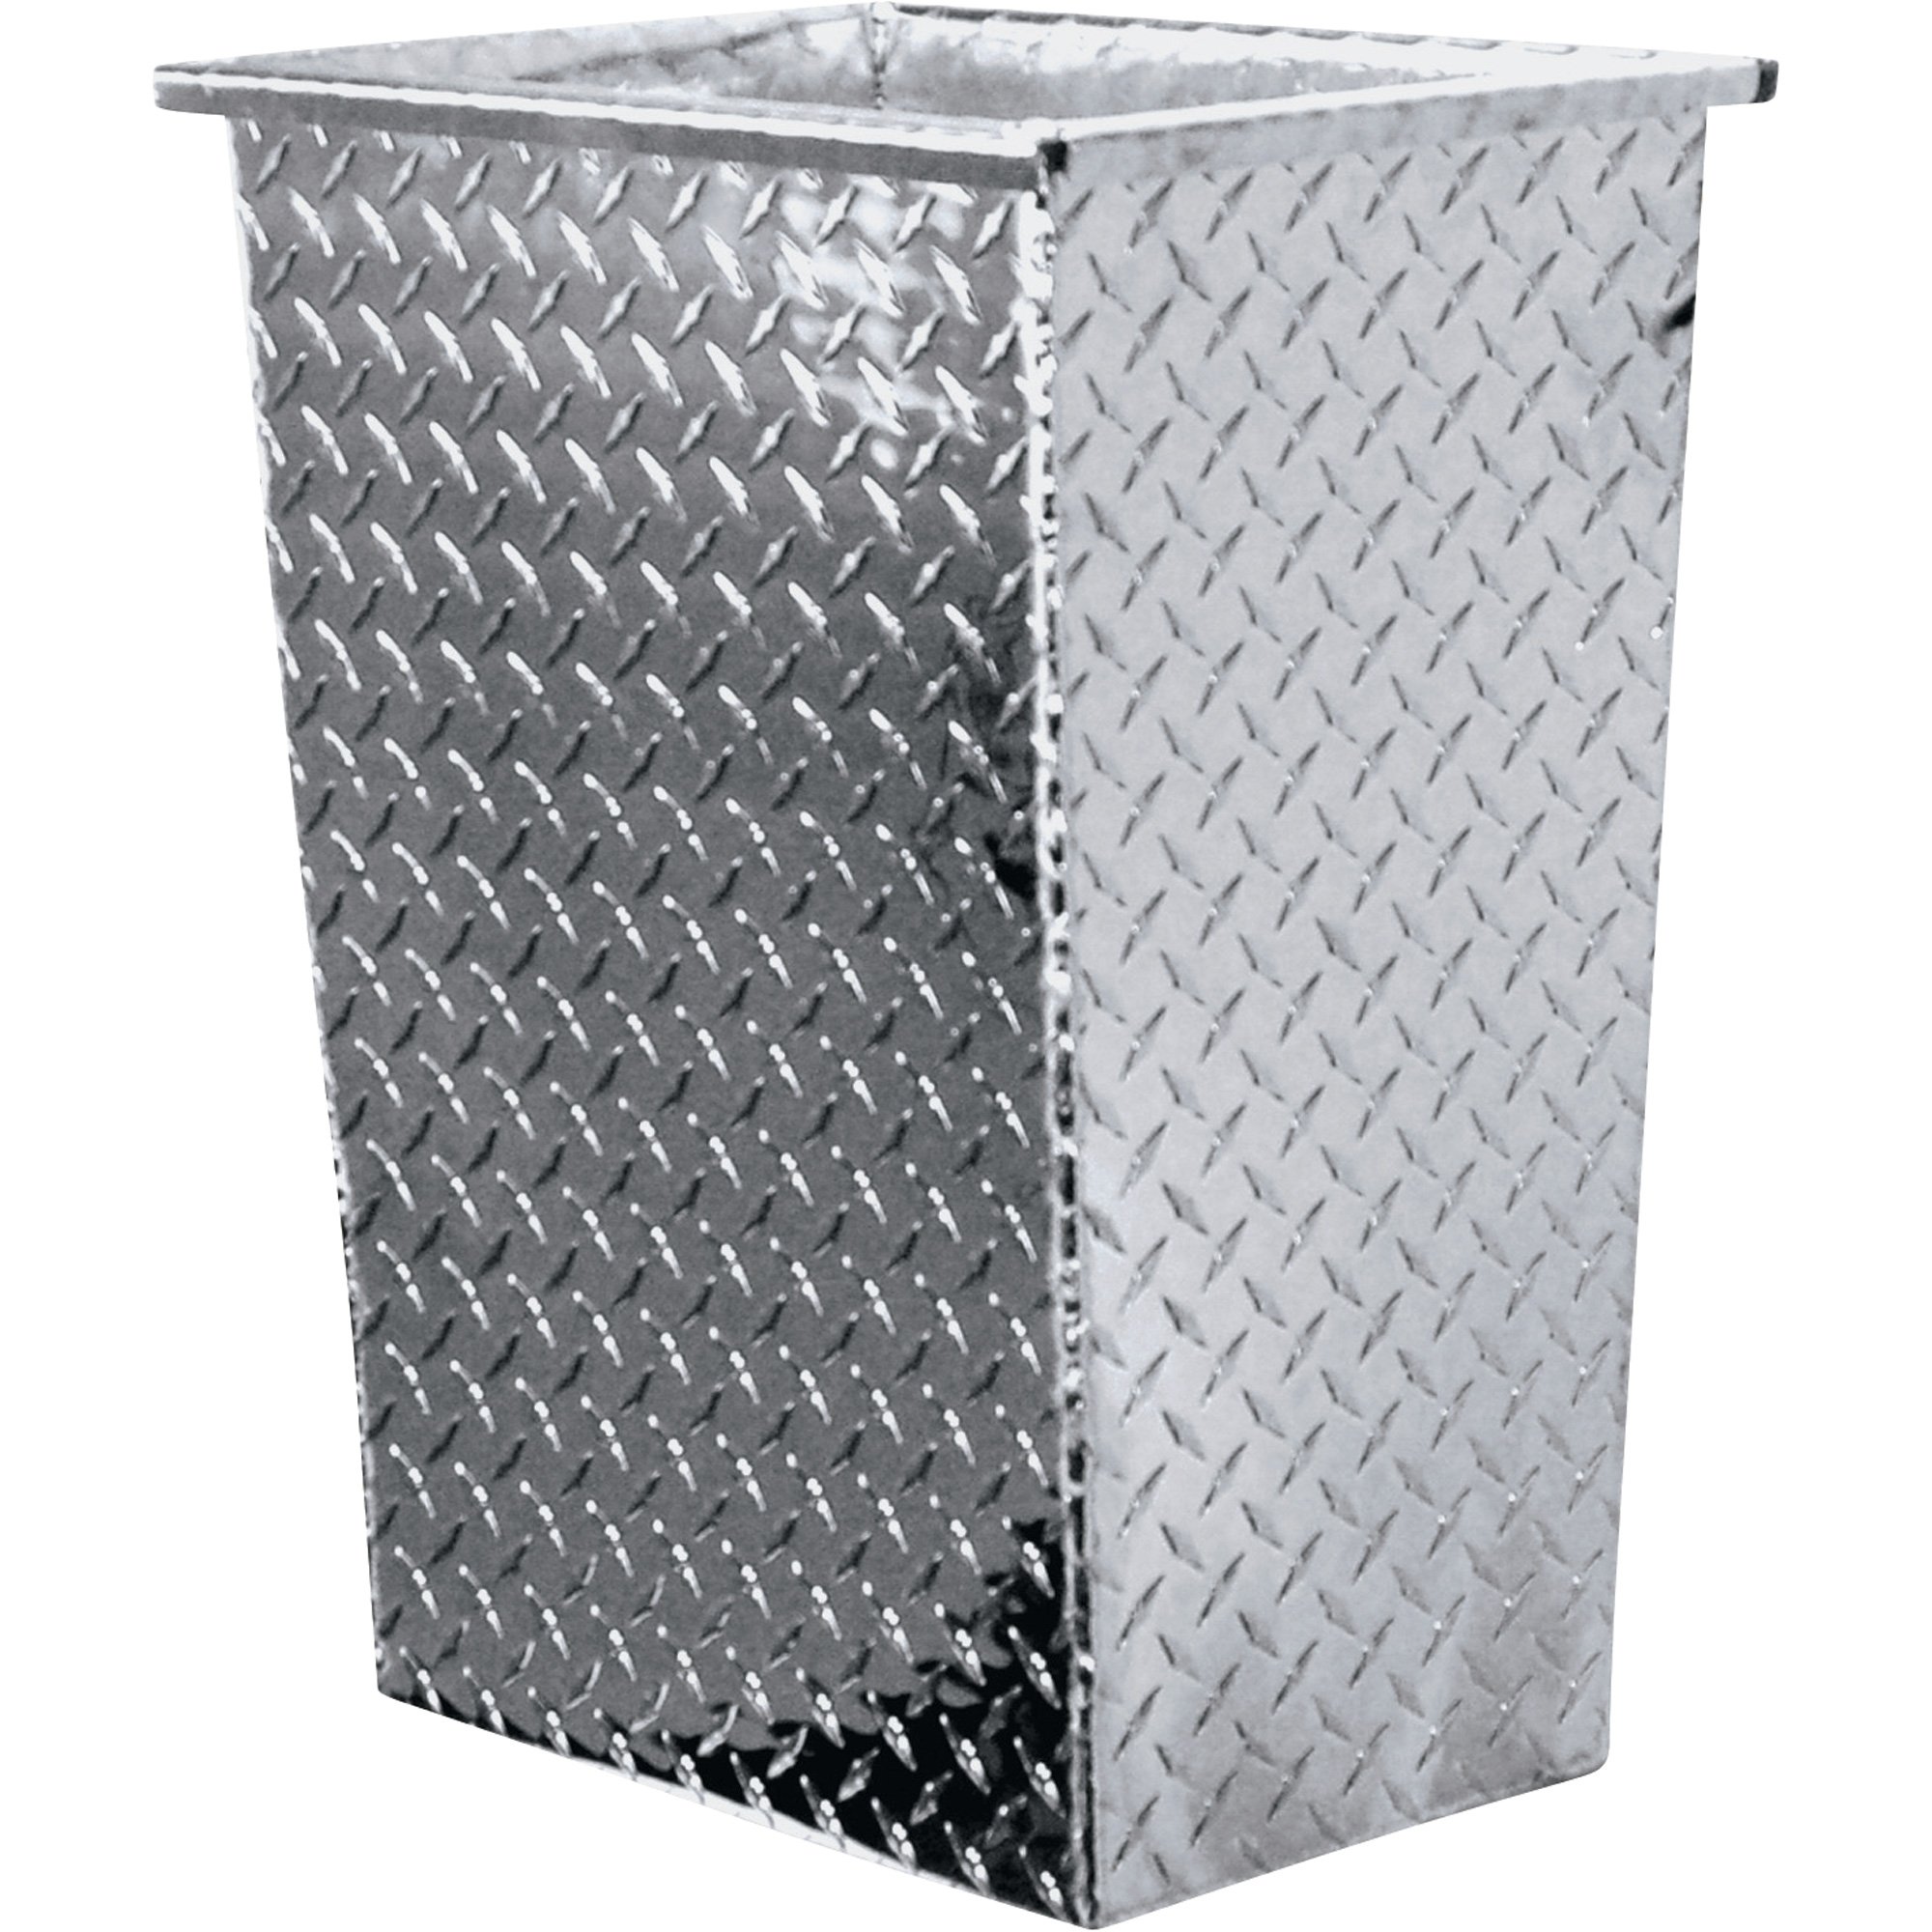 Garage Trash Can, Diamond Plated Garbage Can, & Steel Trash Bins